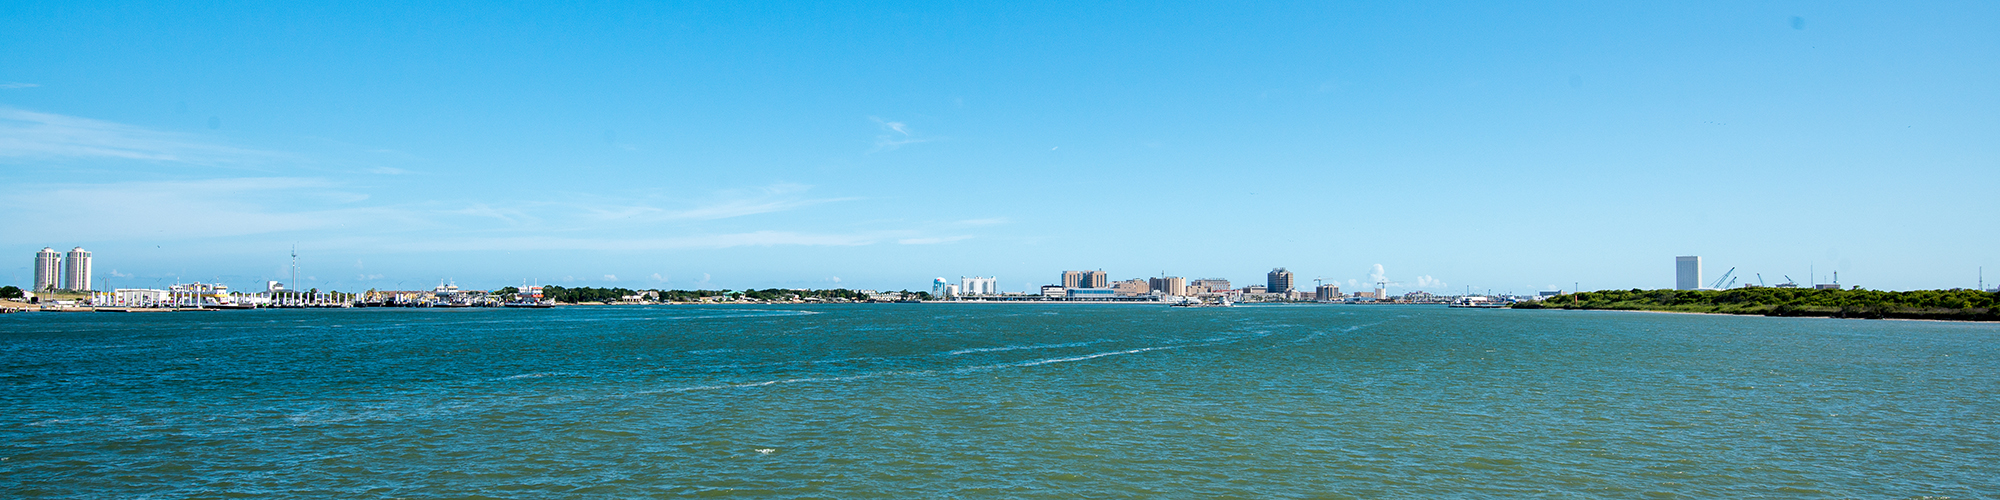 View of Galveston Island from Pelican Island